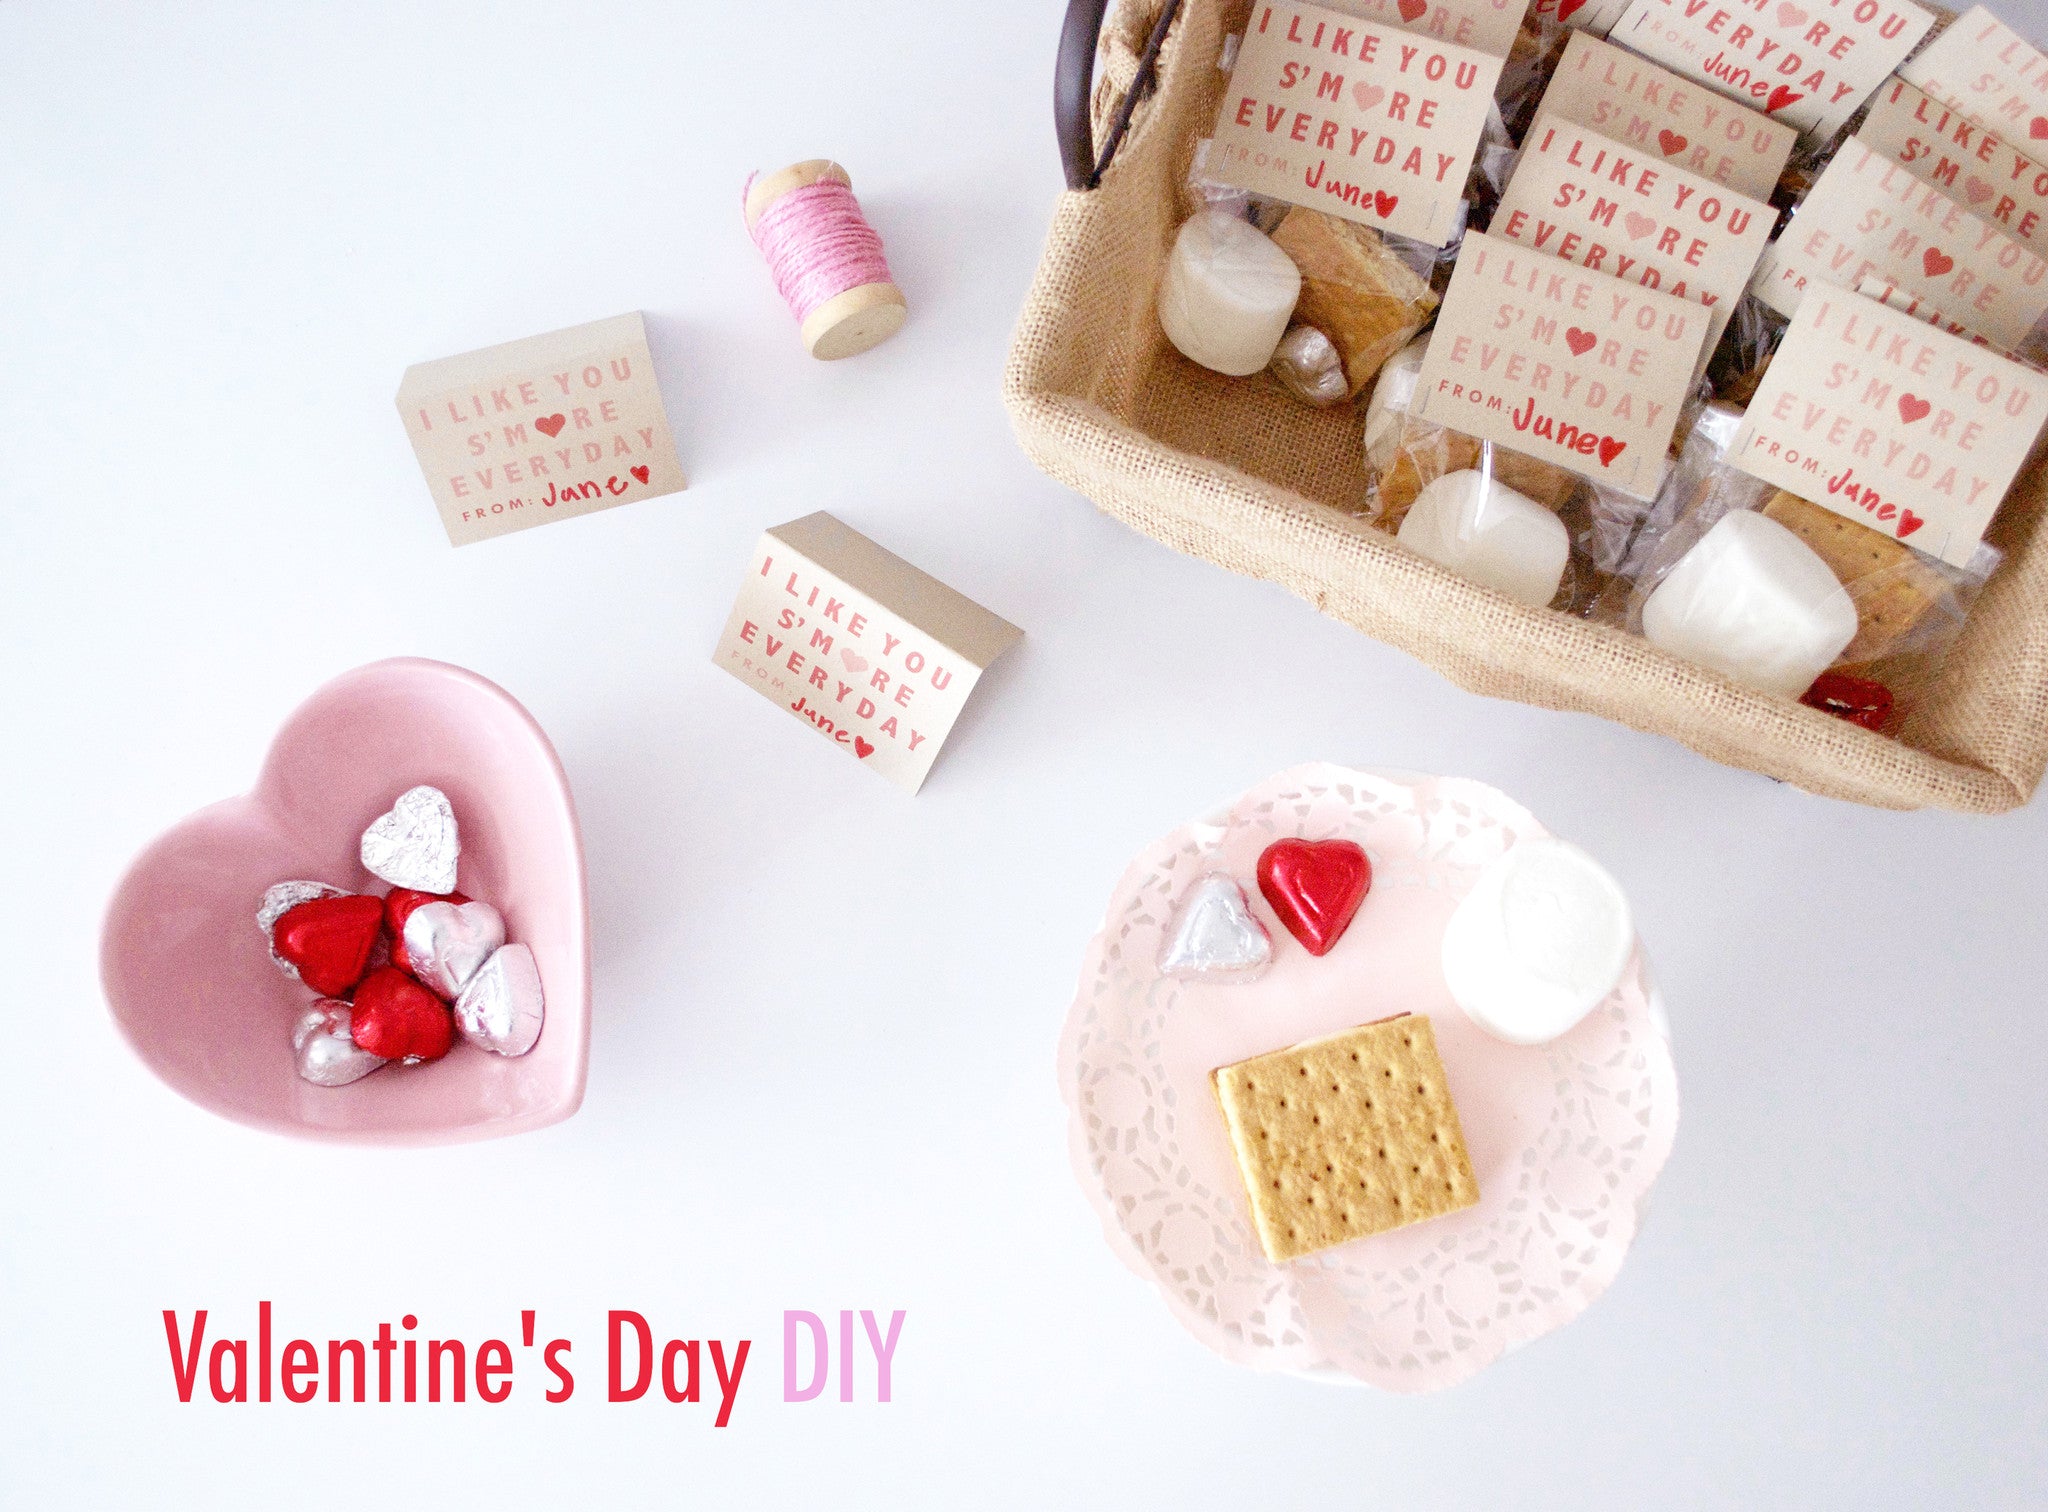 V-Day DIY: I Like You S'more Everyday! ❤️❤️❤️